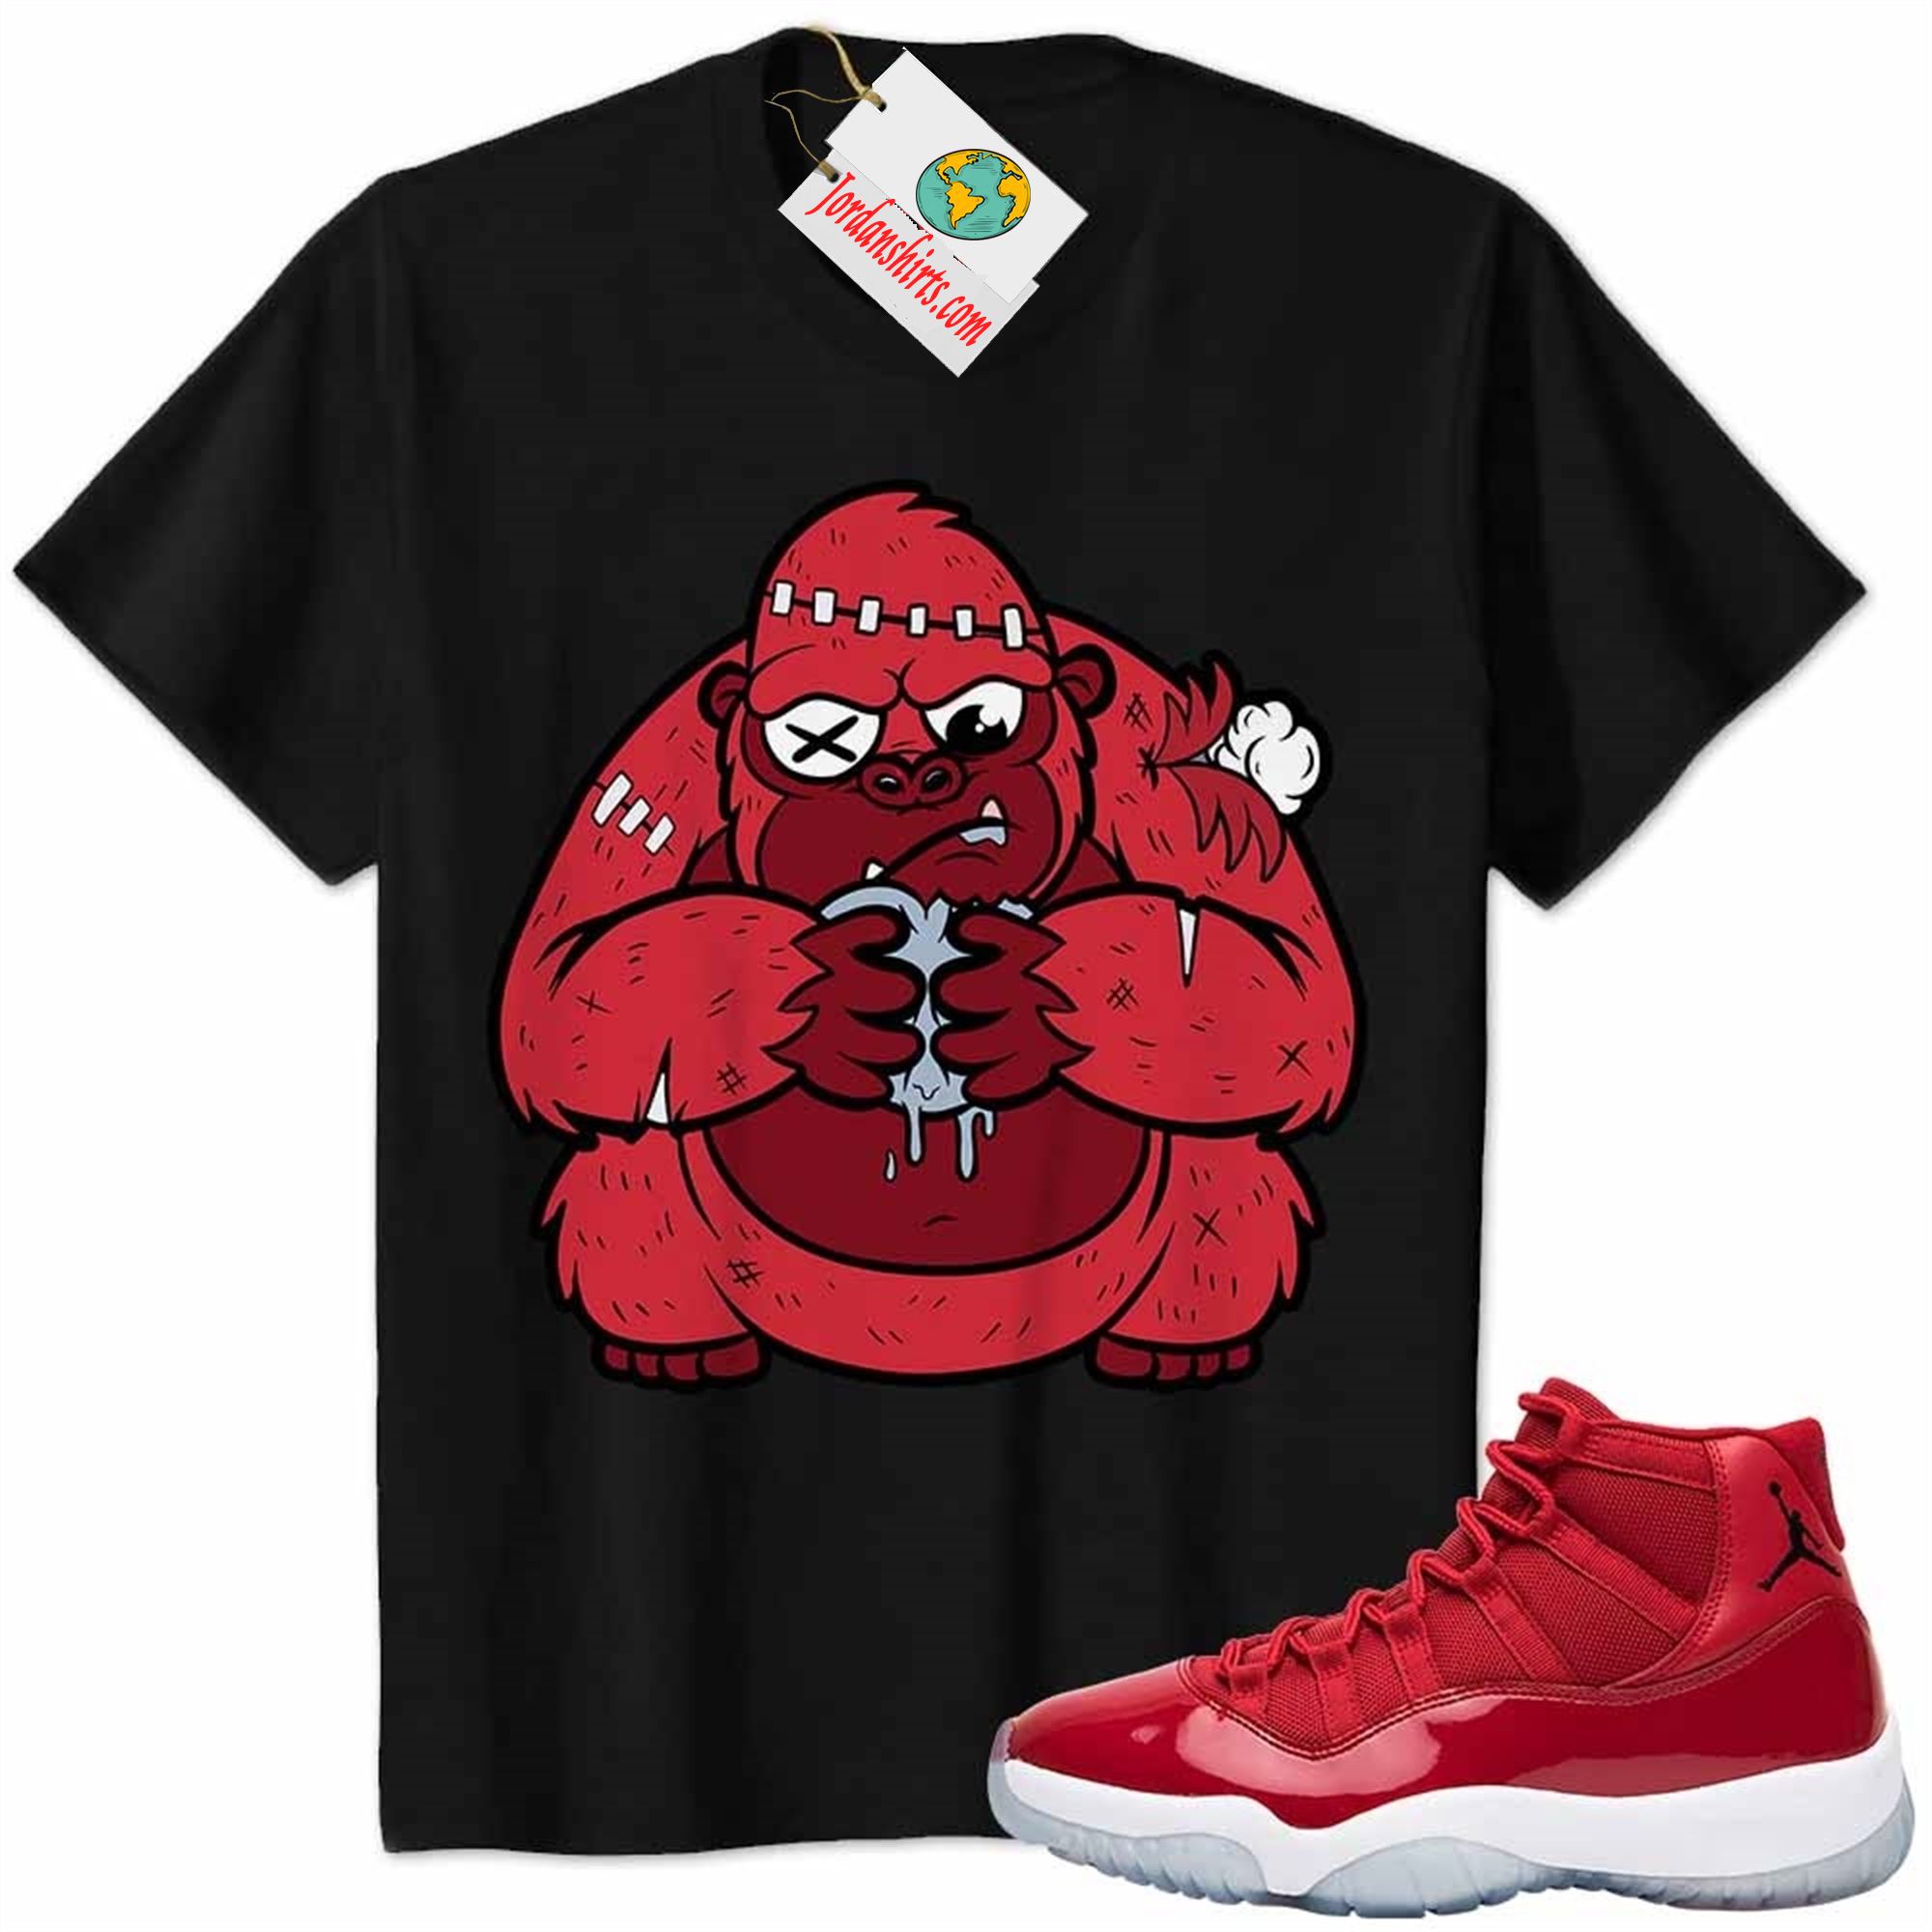 Jordan 11 Shirt, Cute Monkey Broken Heart Black Air Jordan 11 Gym Red 11s Full Size Up To 5xl